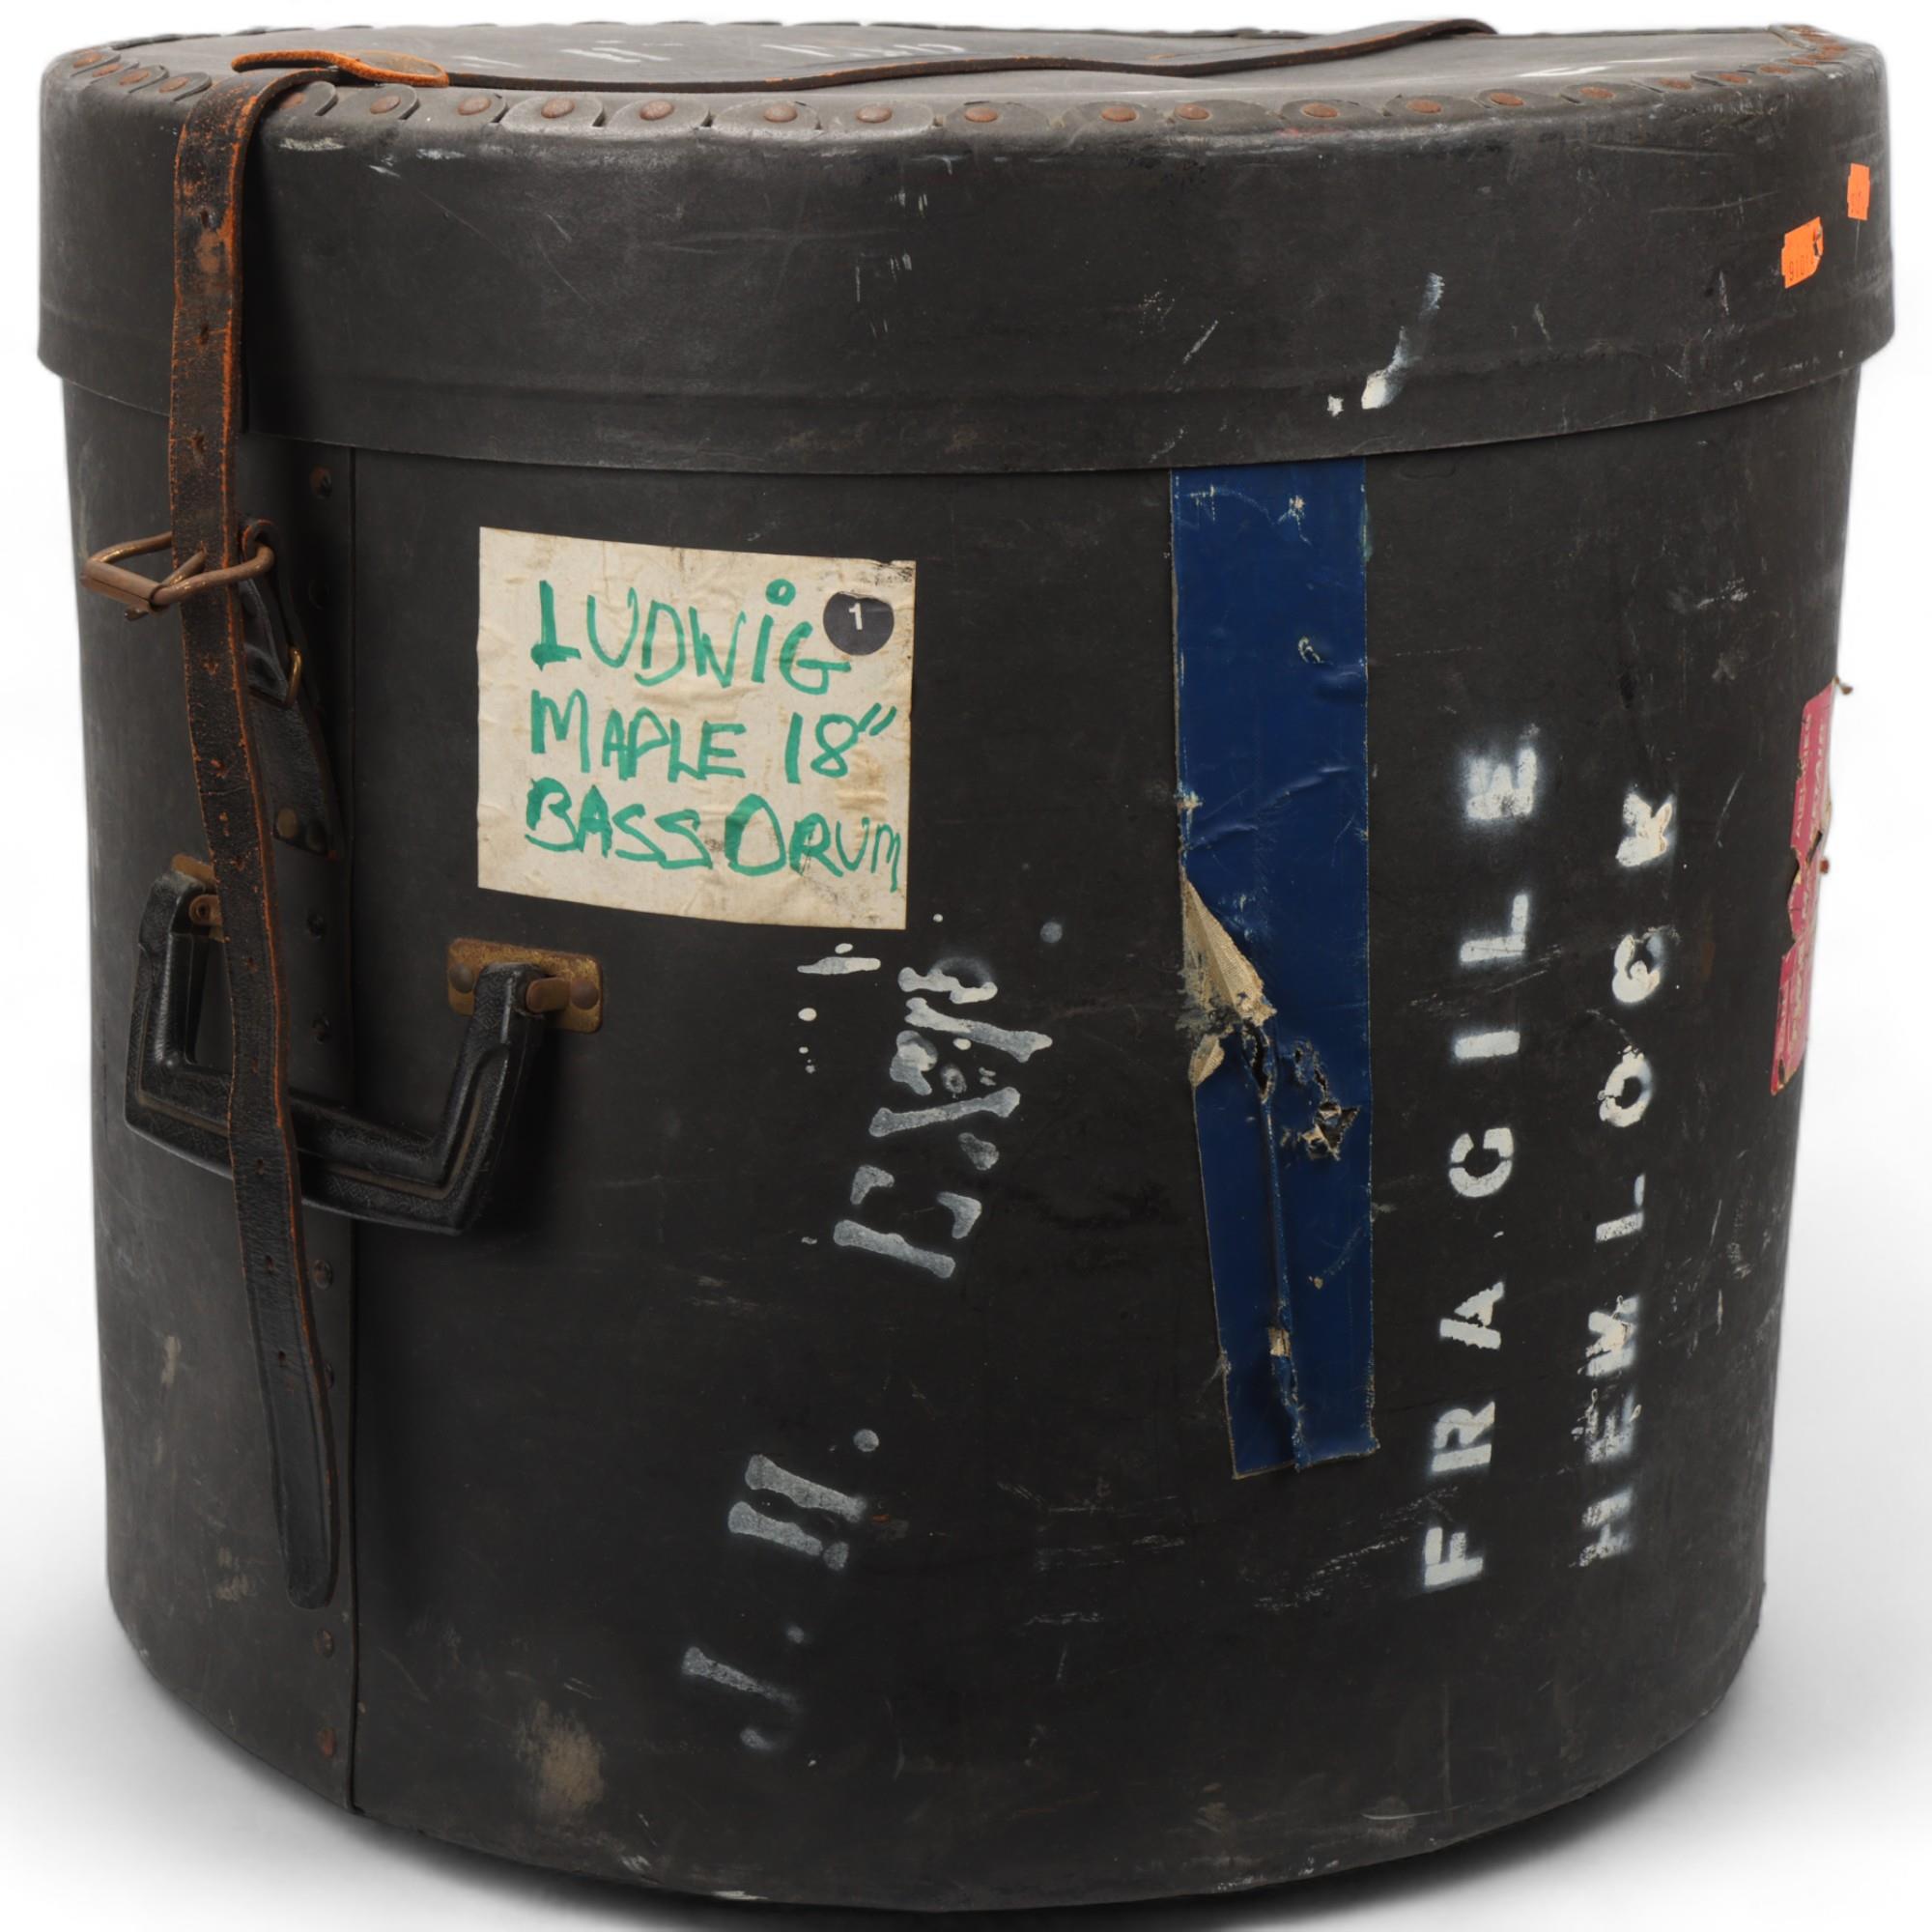 JIMI HENDRIX EXPERIENCE Original drum case owned by MITCH MITCHELL. Original drum case measuring